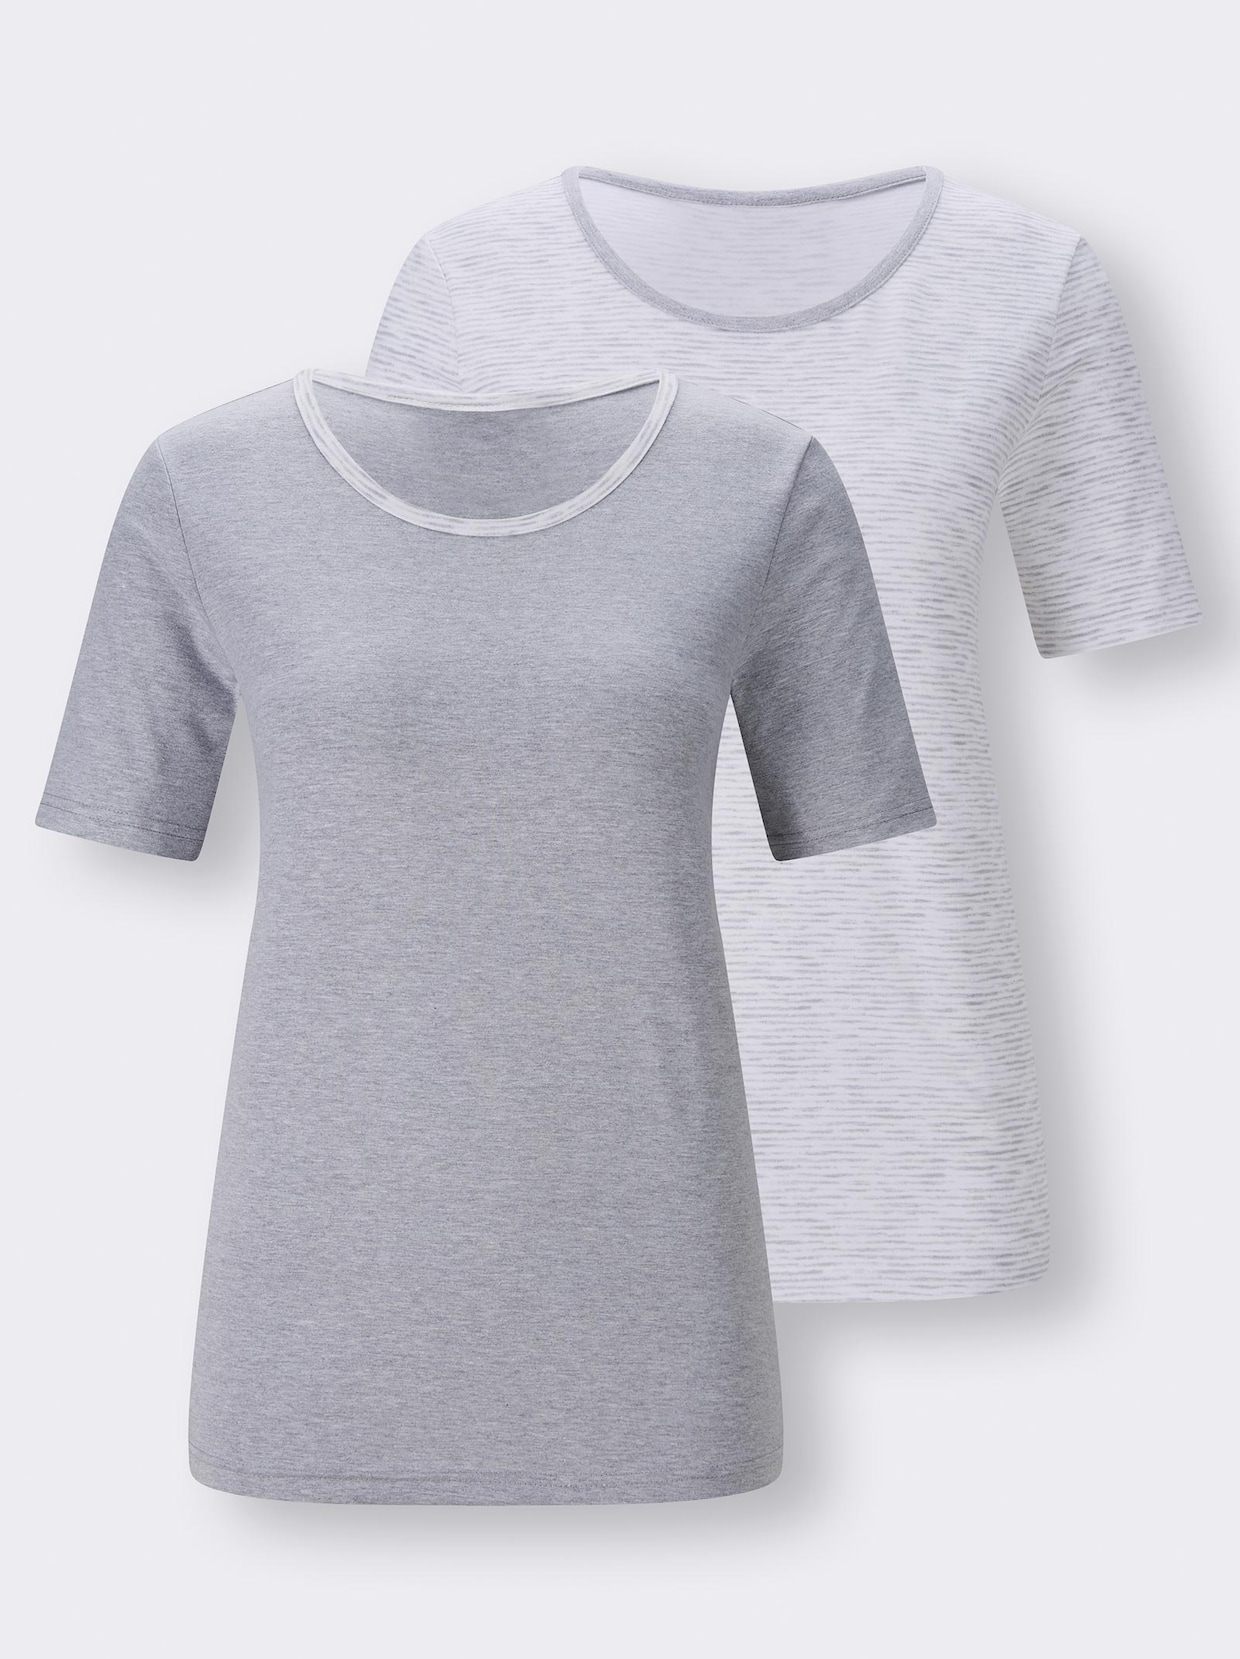 wäschepur Shirt - hellgrau-meliert + weiß-grau-meliert